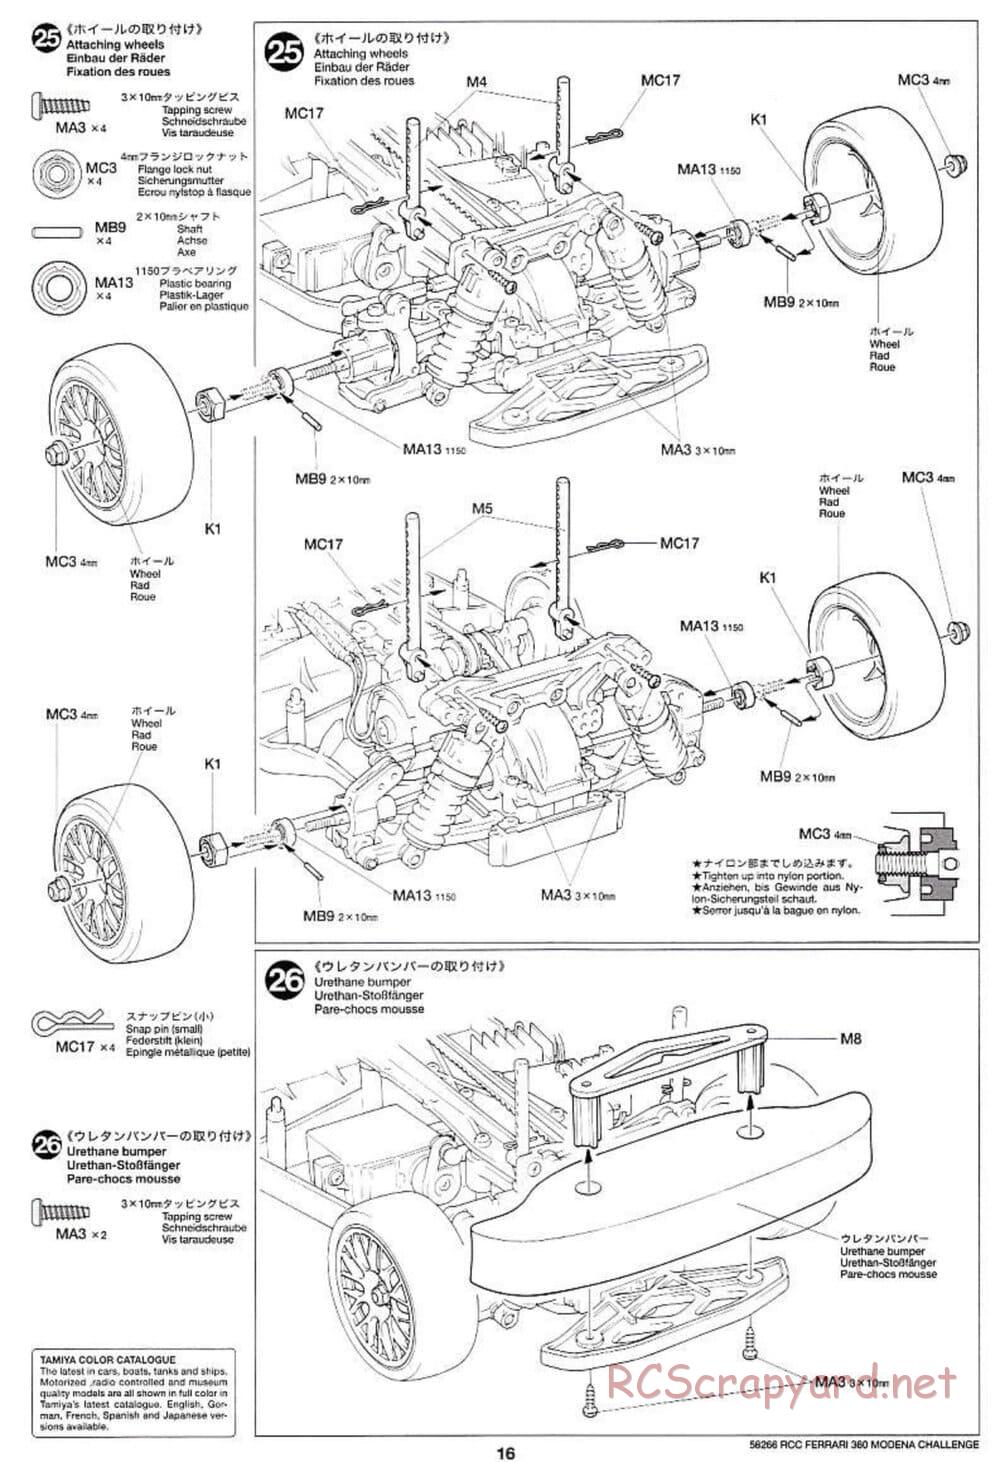 Tamiya - Ferrari 360 Modena Challenge - TA-04 Chassis - Manual - Page 16